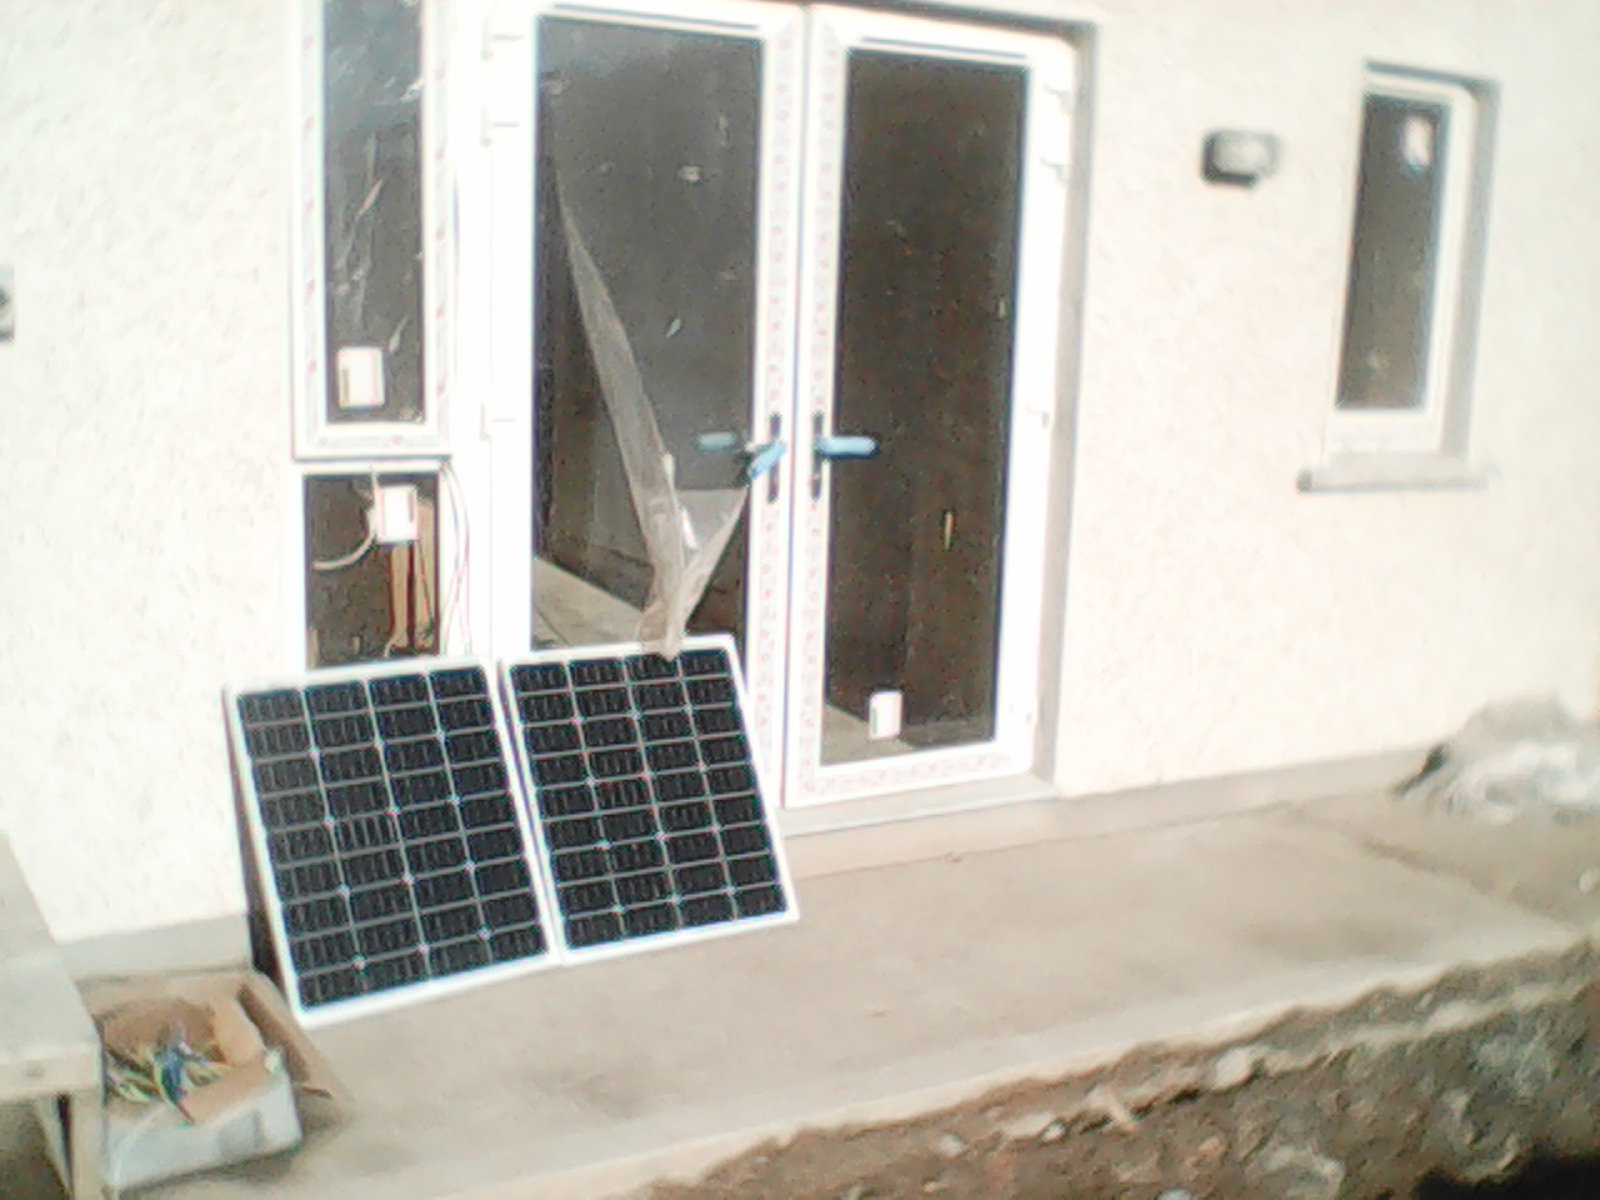 solar panels feeding battery with ca 130W, fan running